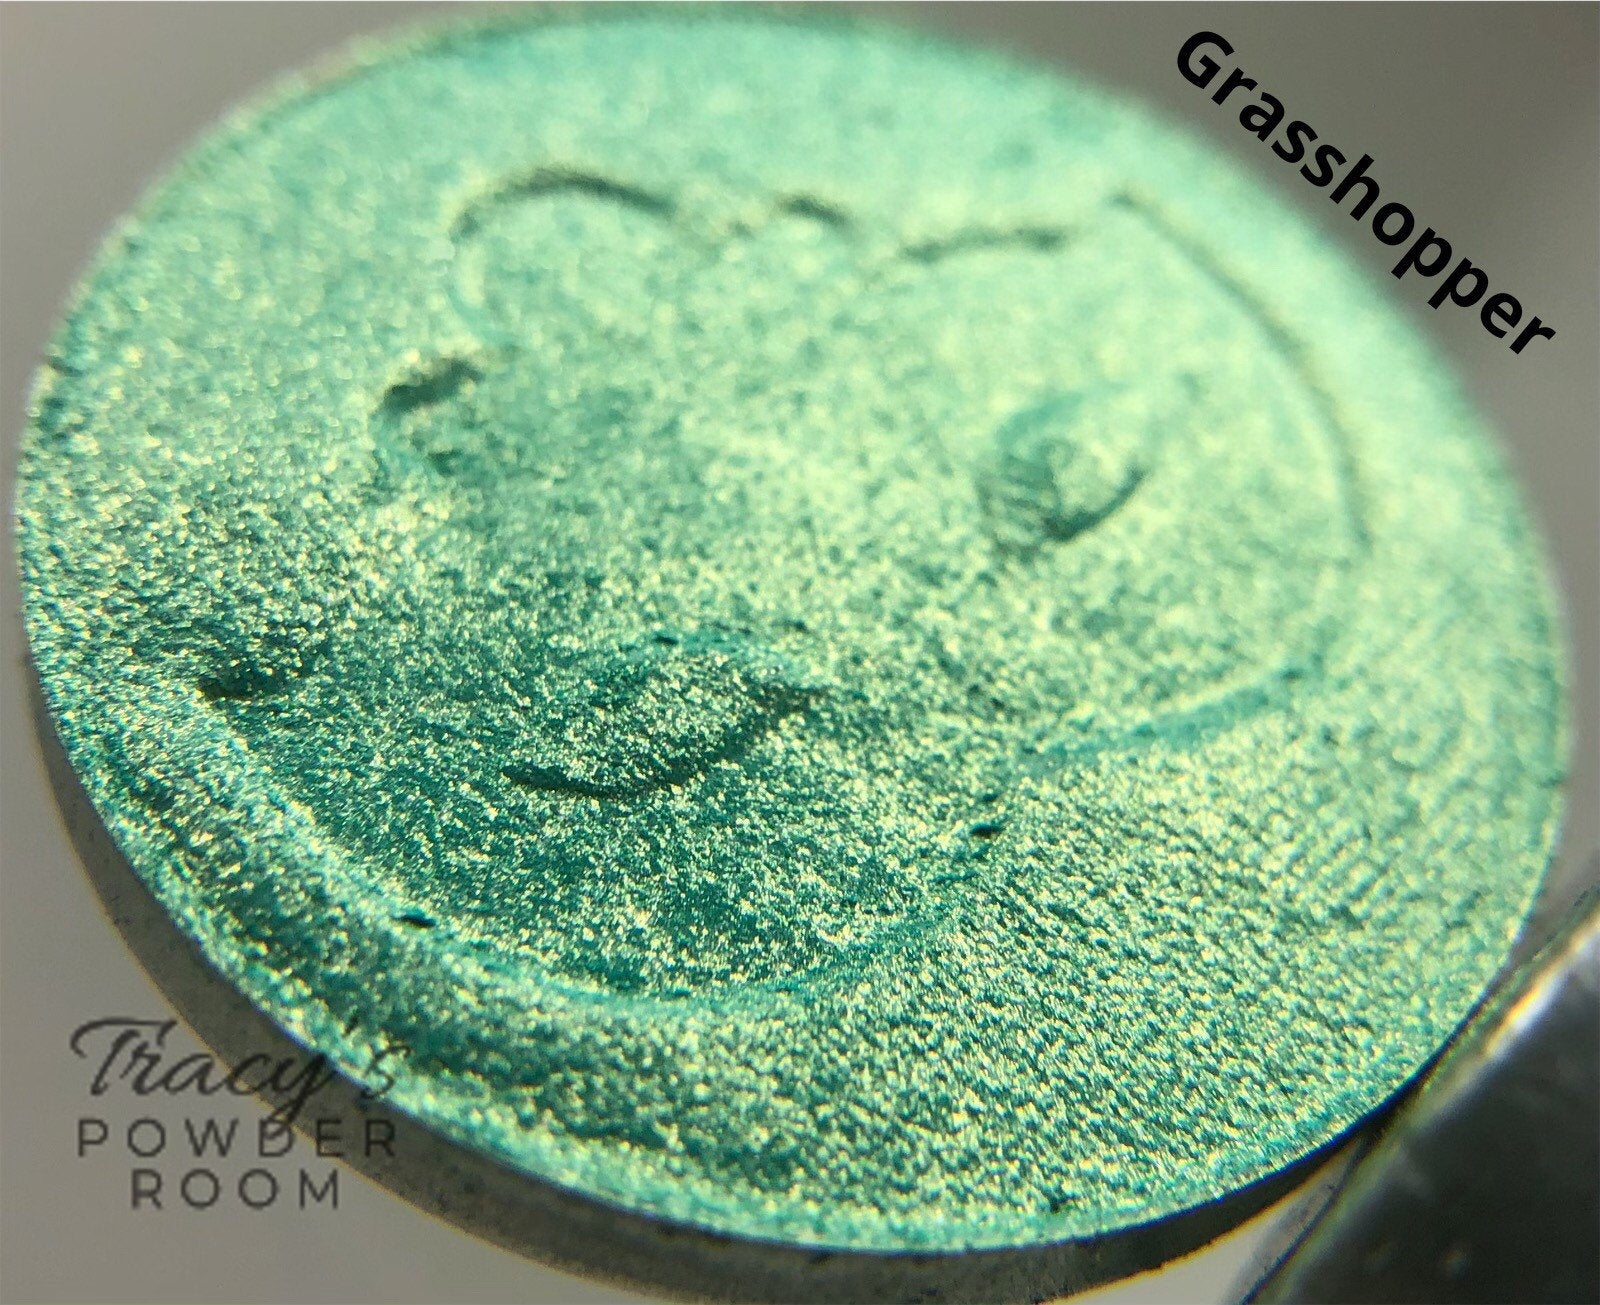 GRASSHOPPER  Pressed Pigment/Eyeshadow, Green Eyeshadow, Duochrome, Indie Make up, Indie Eyeshadow, Gift for her, Mua, Gold Eyeshadow